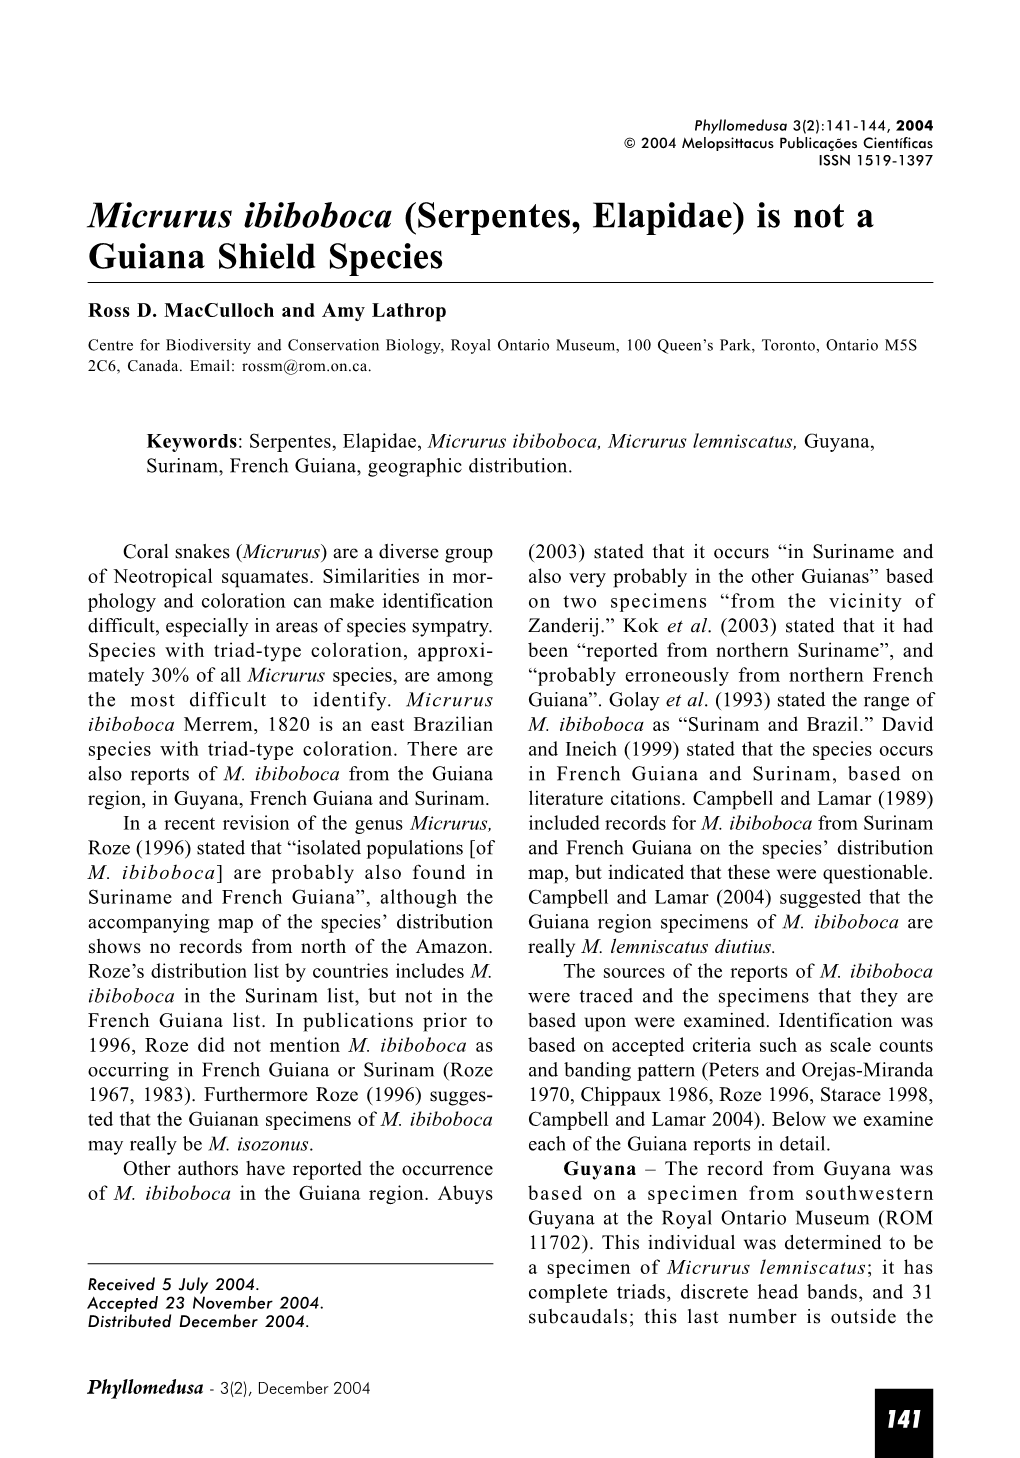 Micrurus Ibiboboca (Serpentes, Elapidae) Is Not a Guiana Shield Species